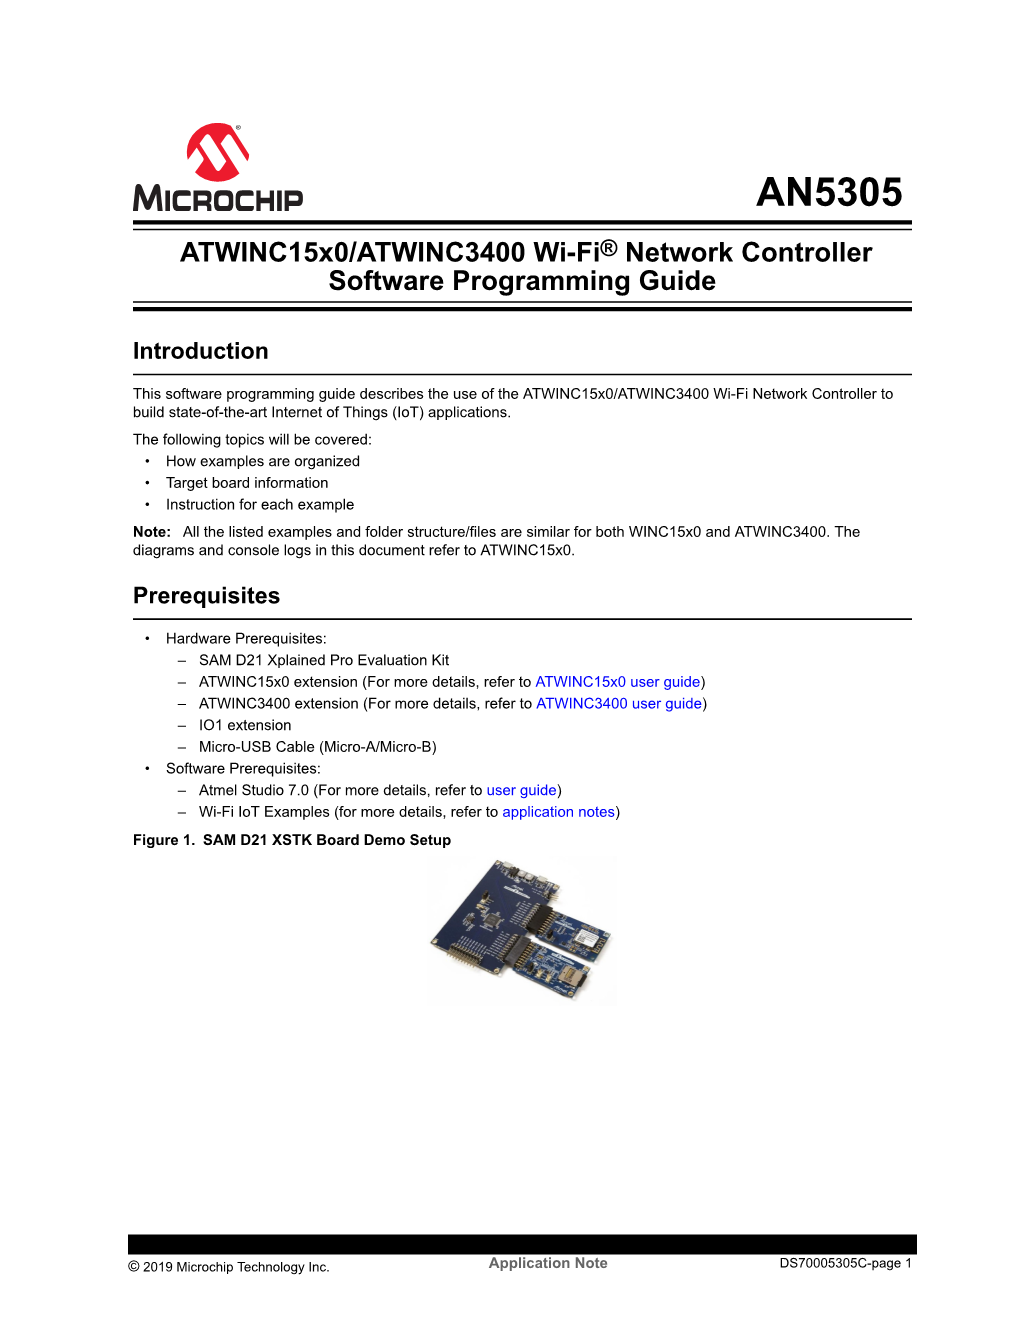 Atwinc15x0 ATWINC3400 Wi-Fi Network Controller Software Programming Guide